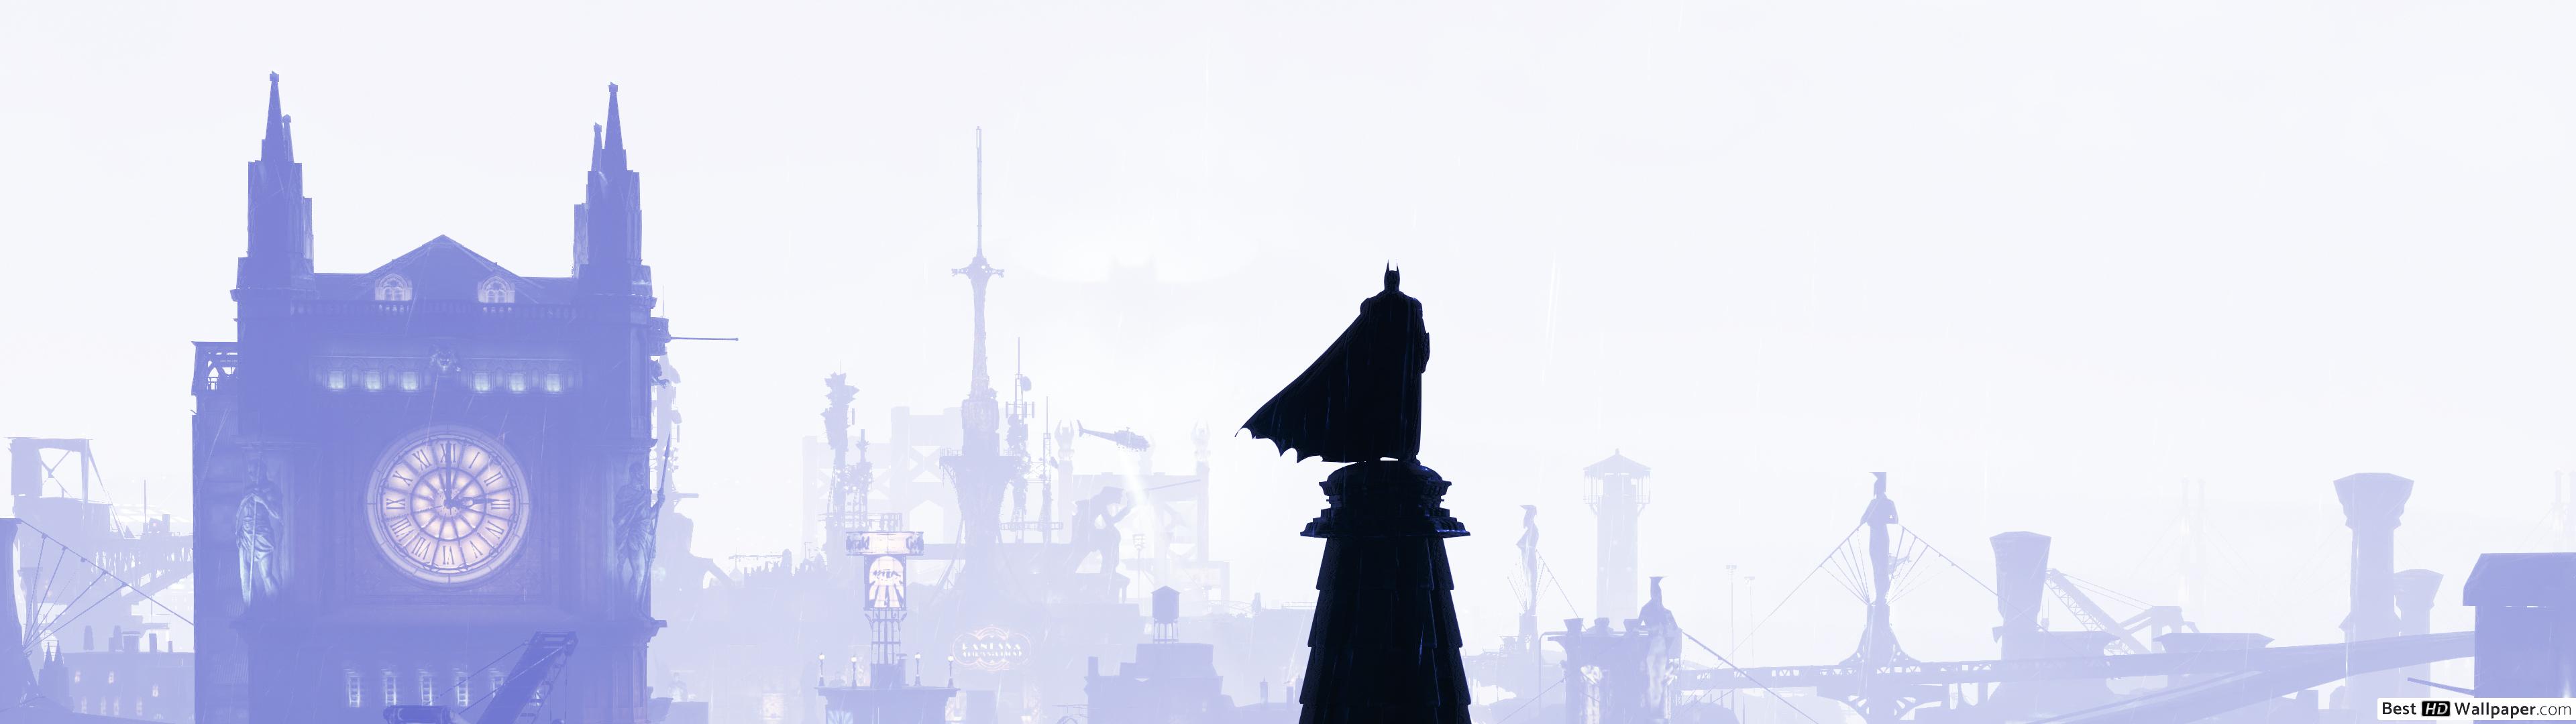 Batman in the city minimalist HD wallpaper download